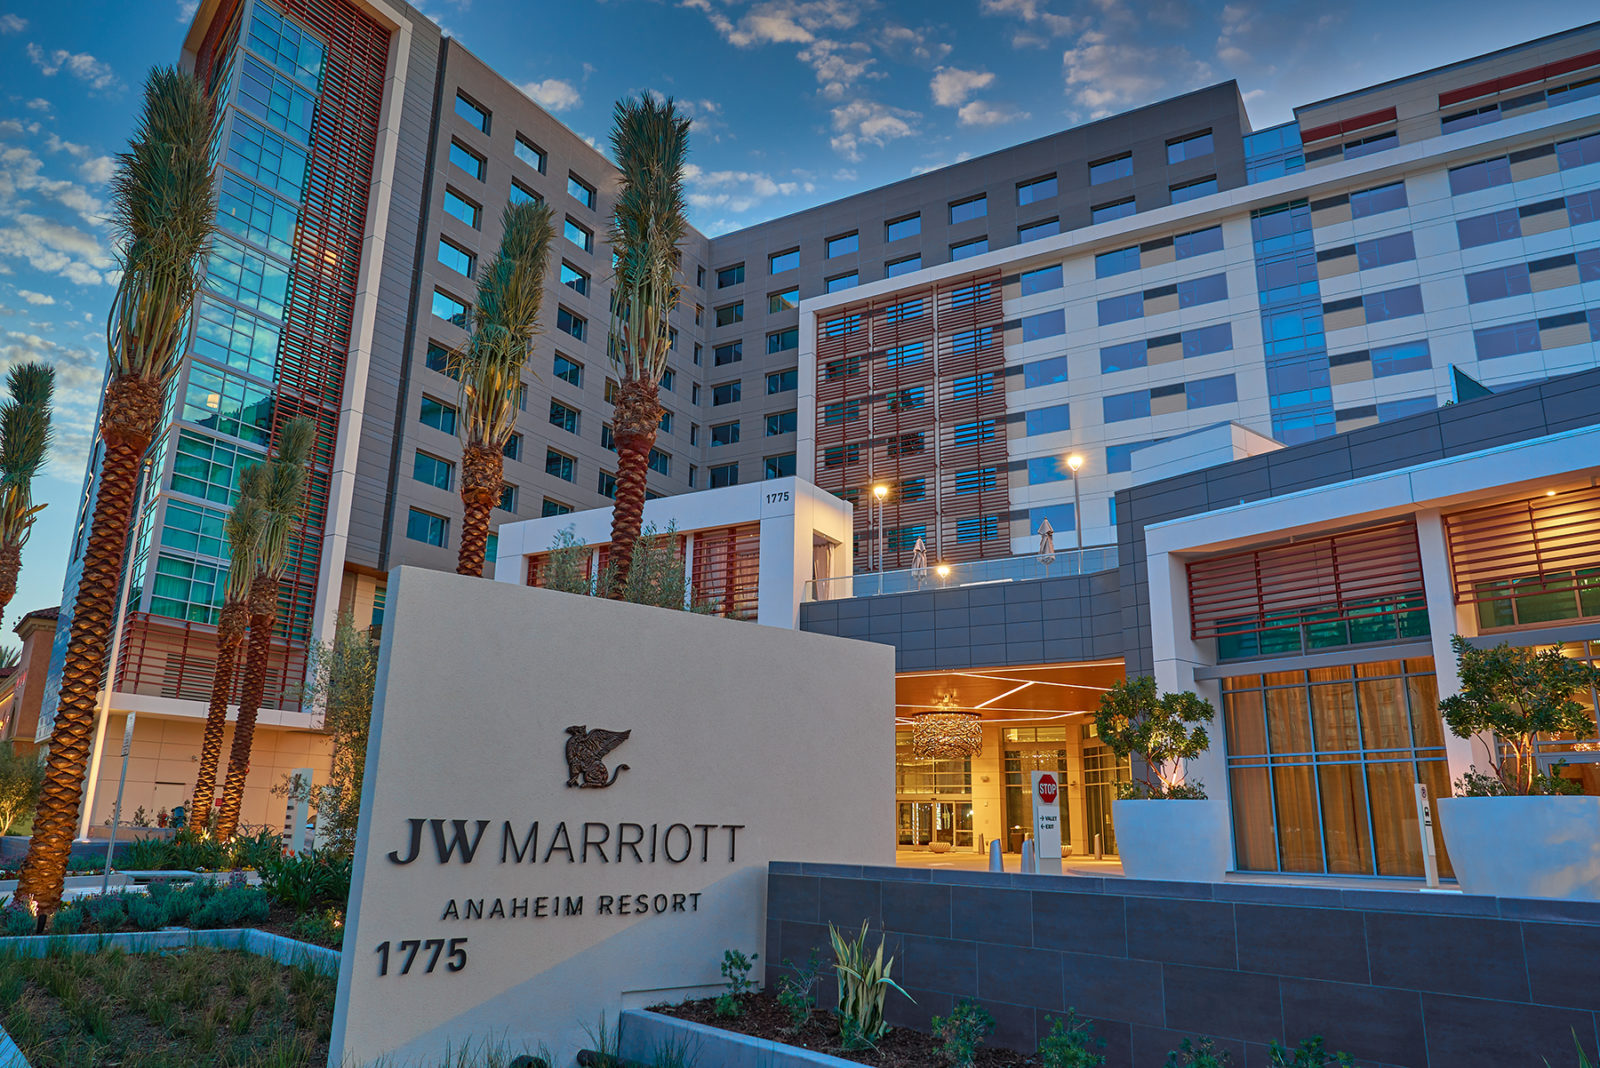 JW Marriott Anaheim Resort in Anaheim, CA (Prospera Hotels) W.E. O